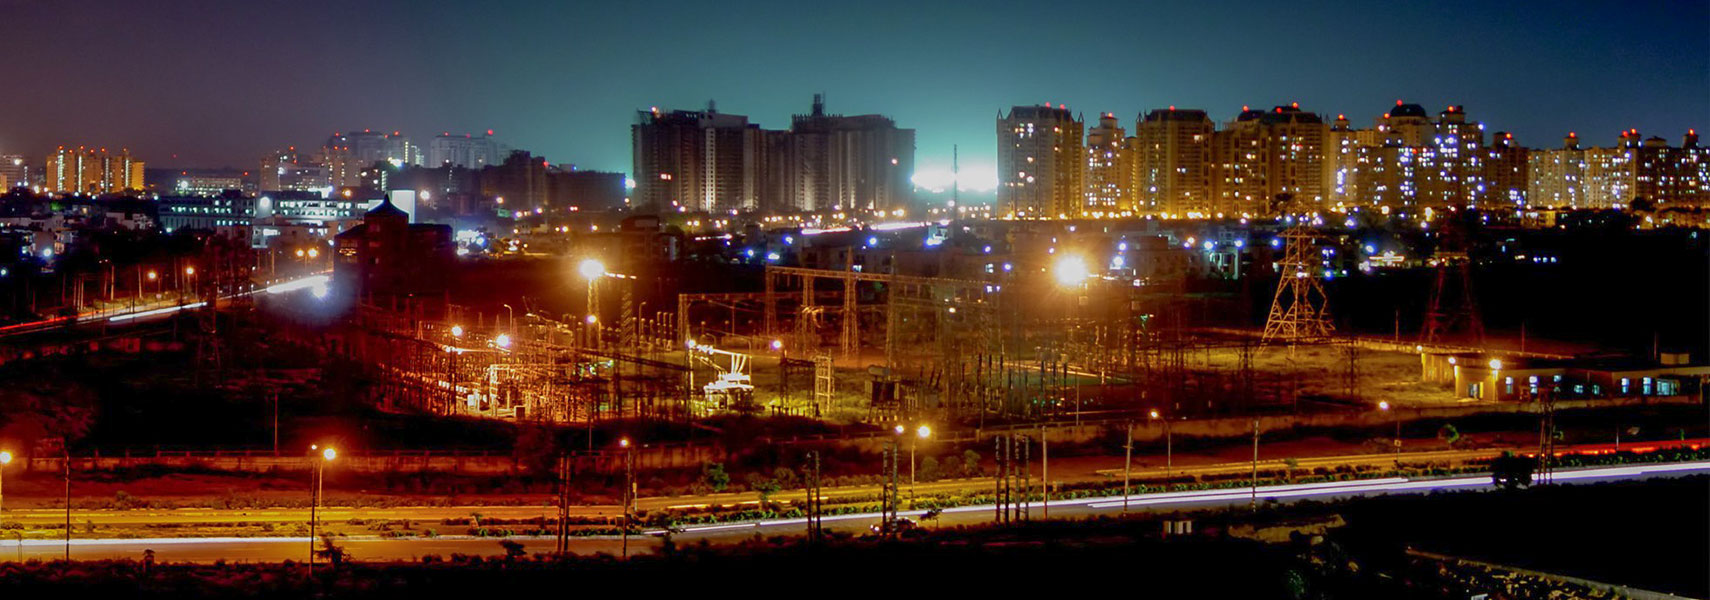 Skyline of Gurgaon at night